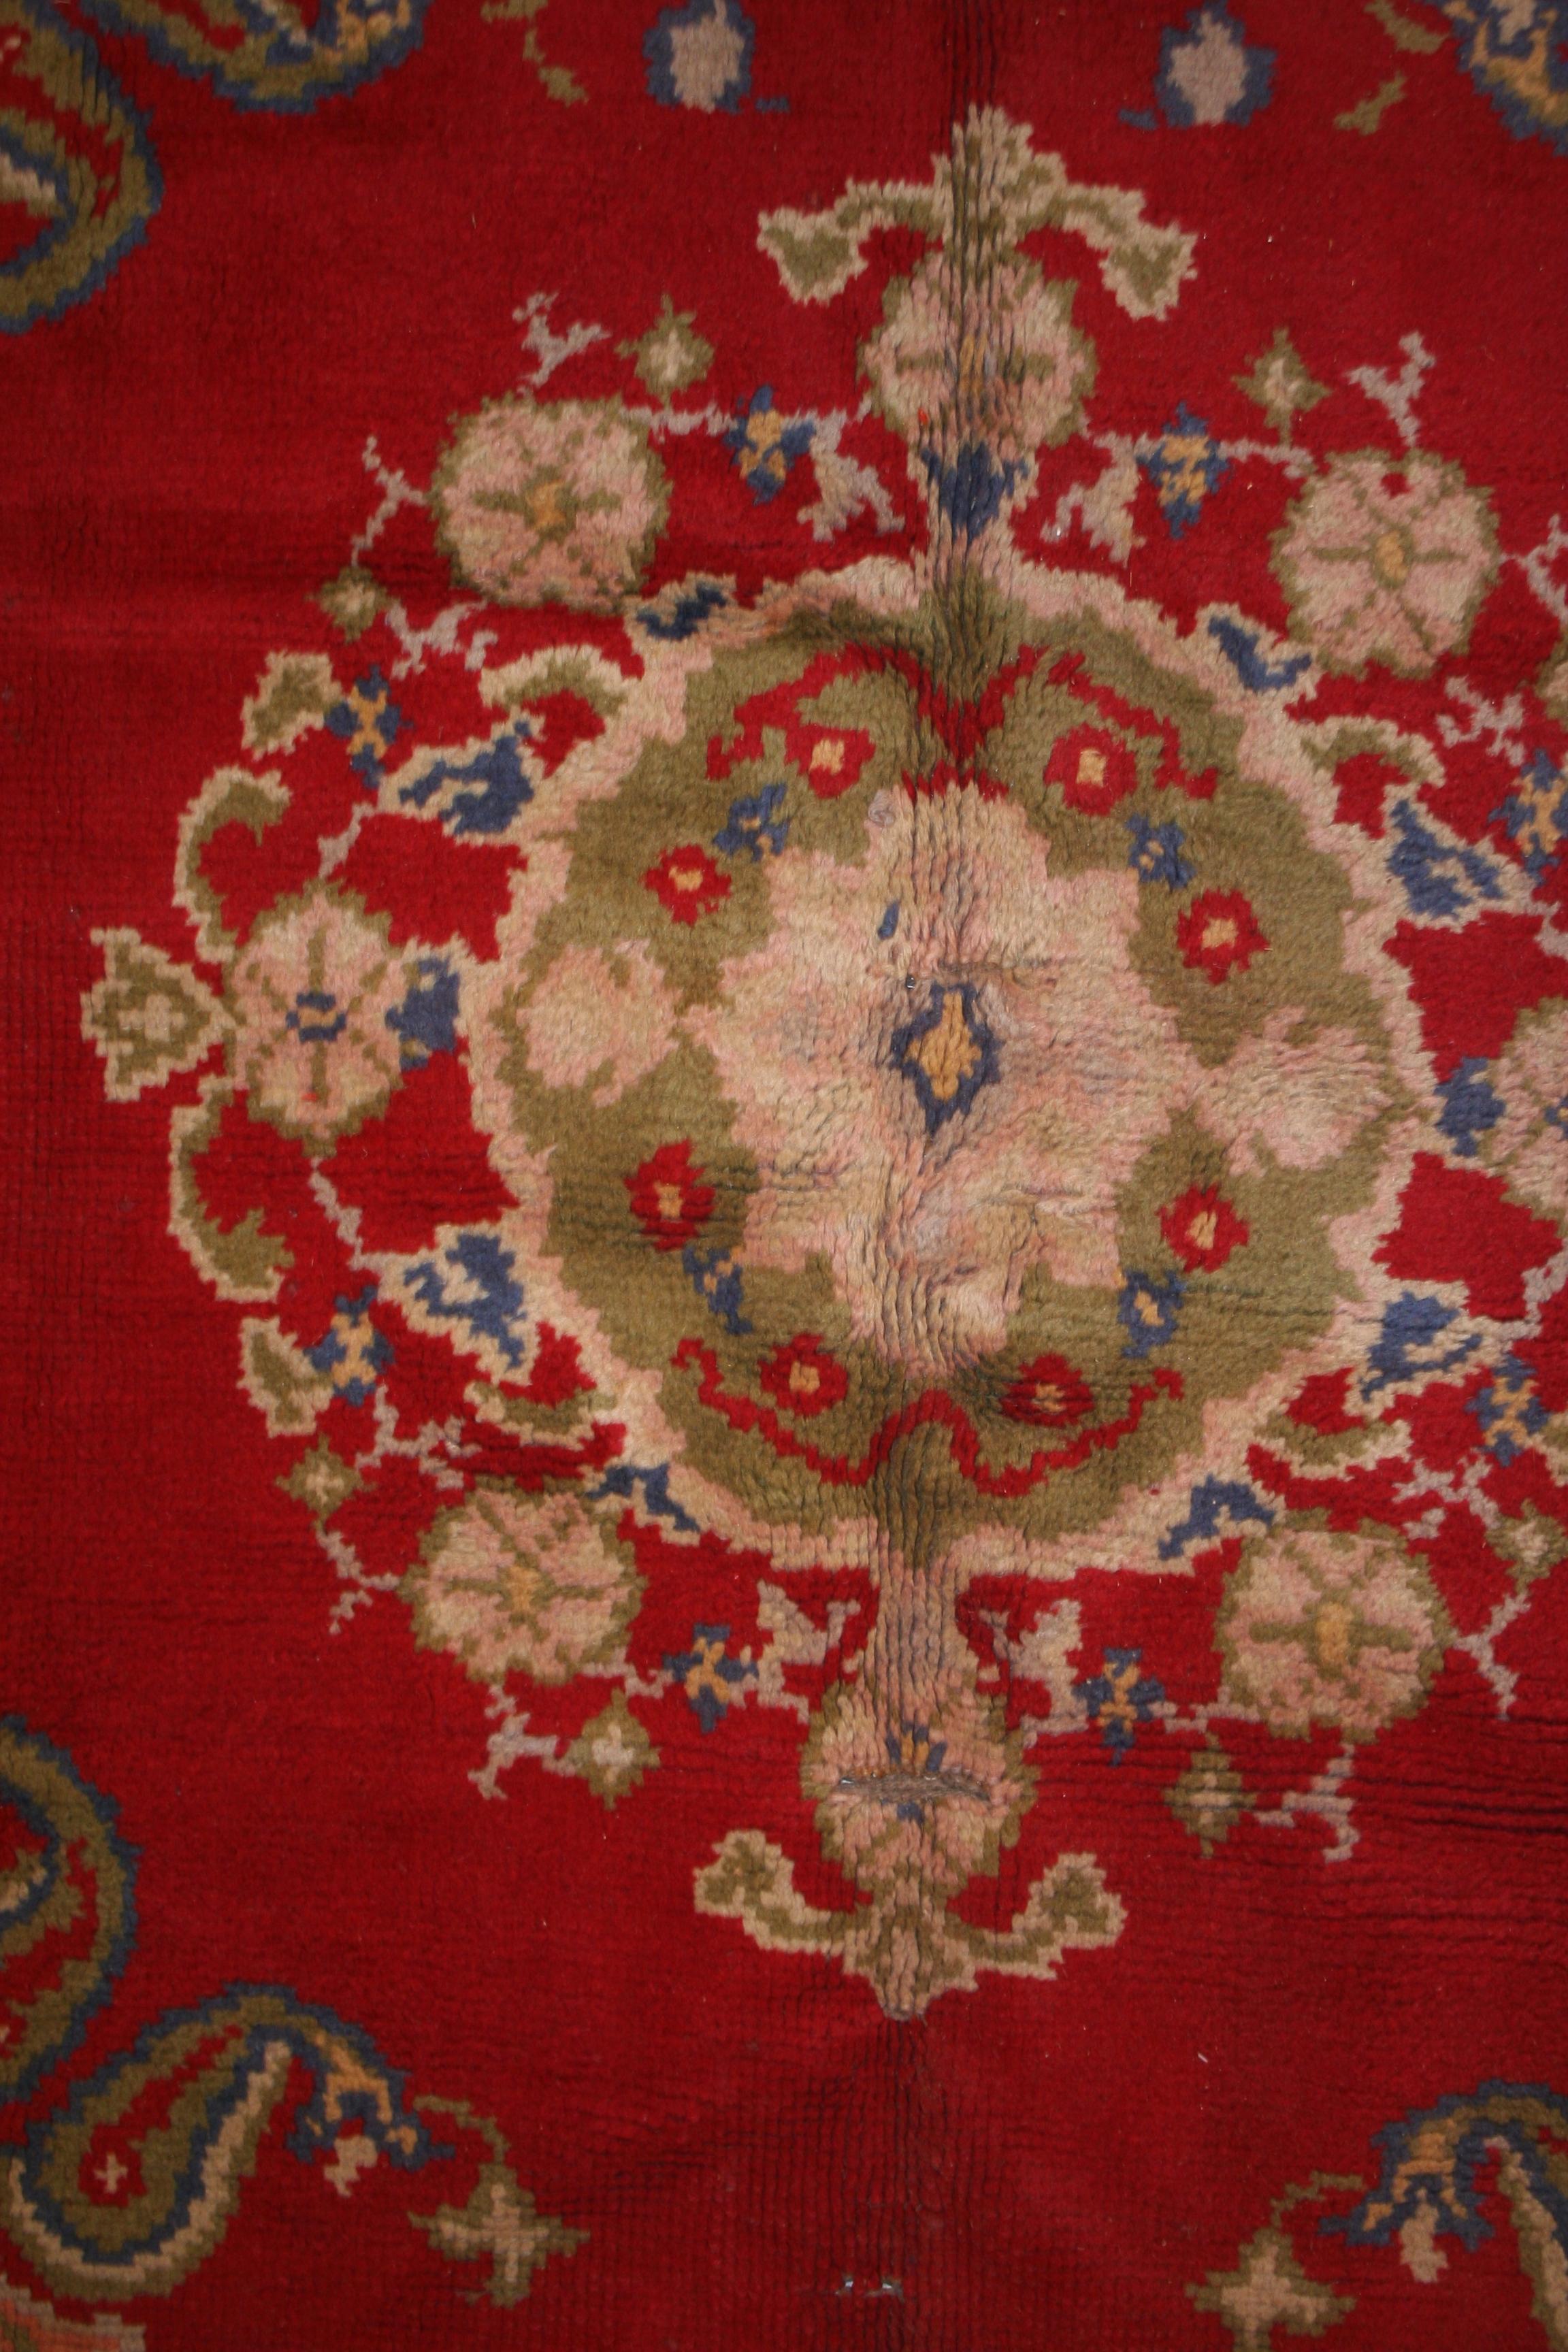 orientalist rugs